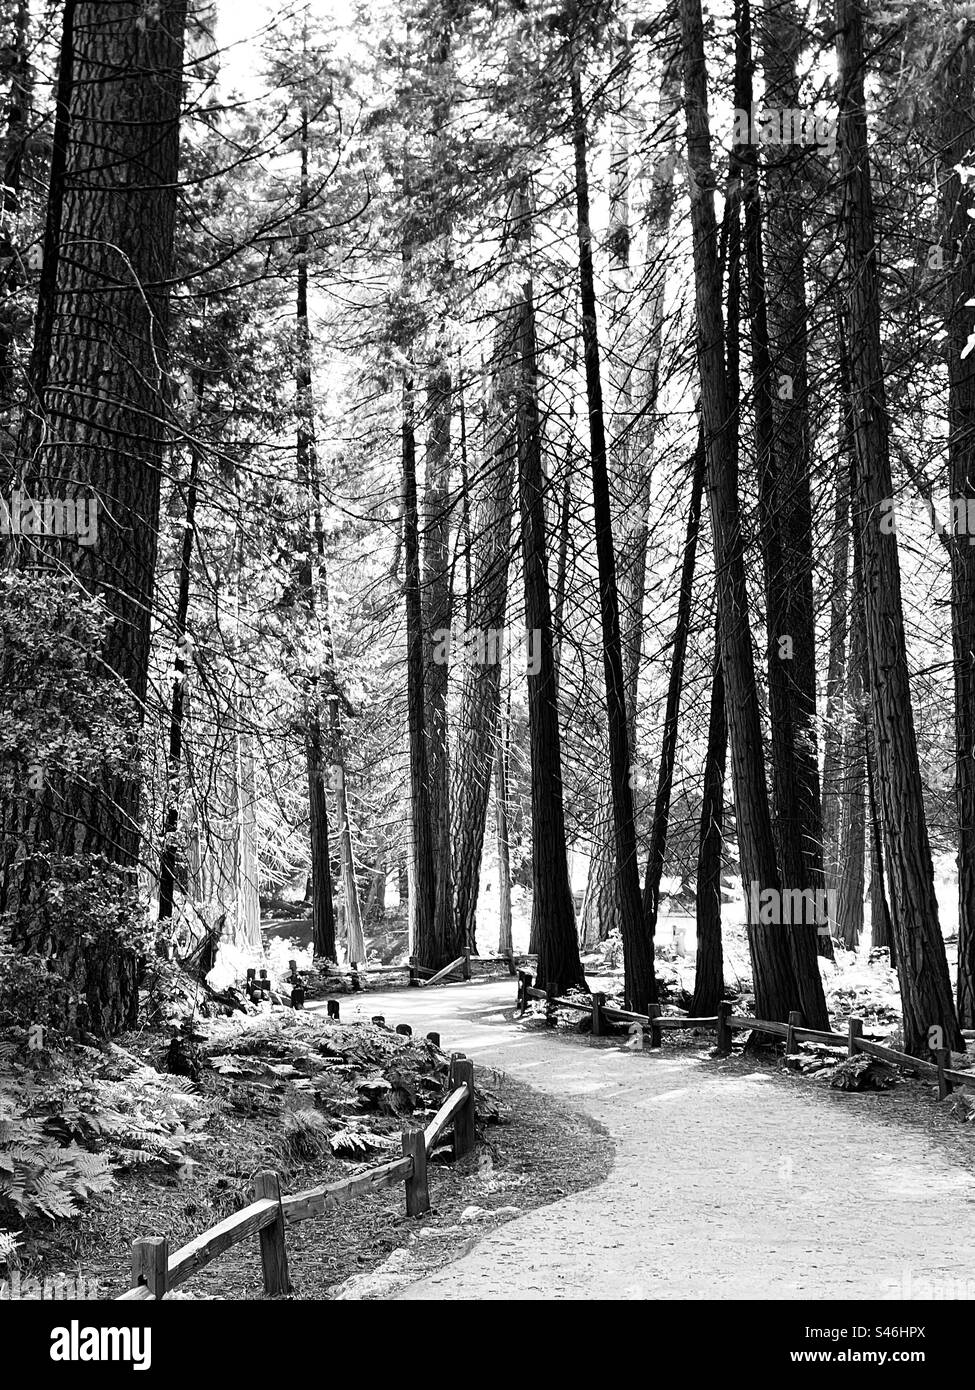 Path wind’s between the trees. Yosemite National Park, California USA. Stock Photo